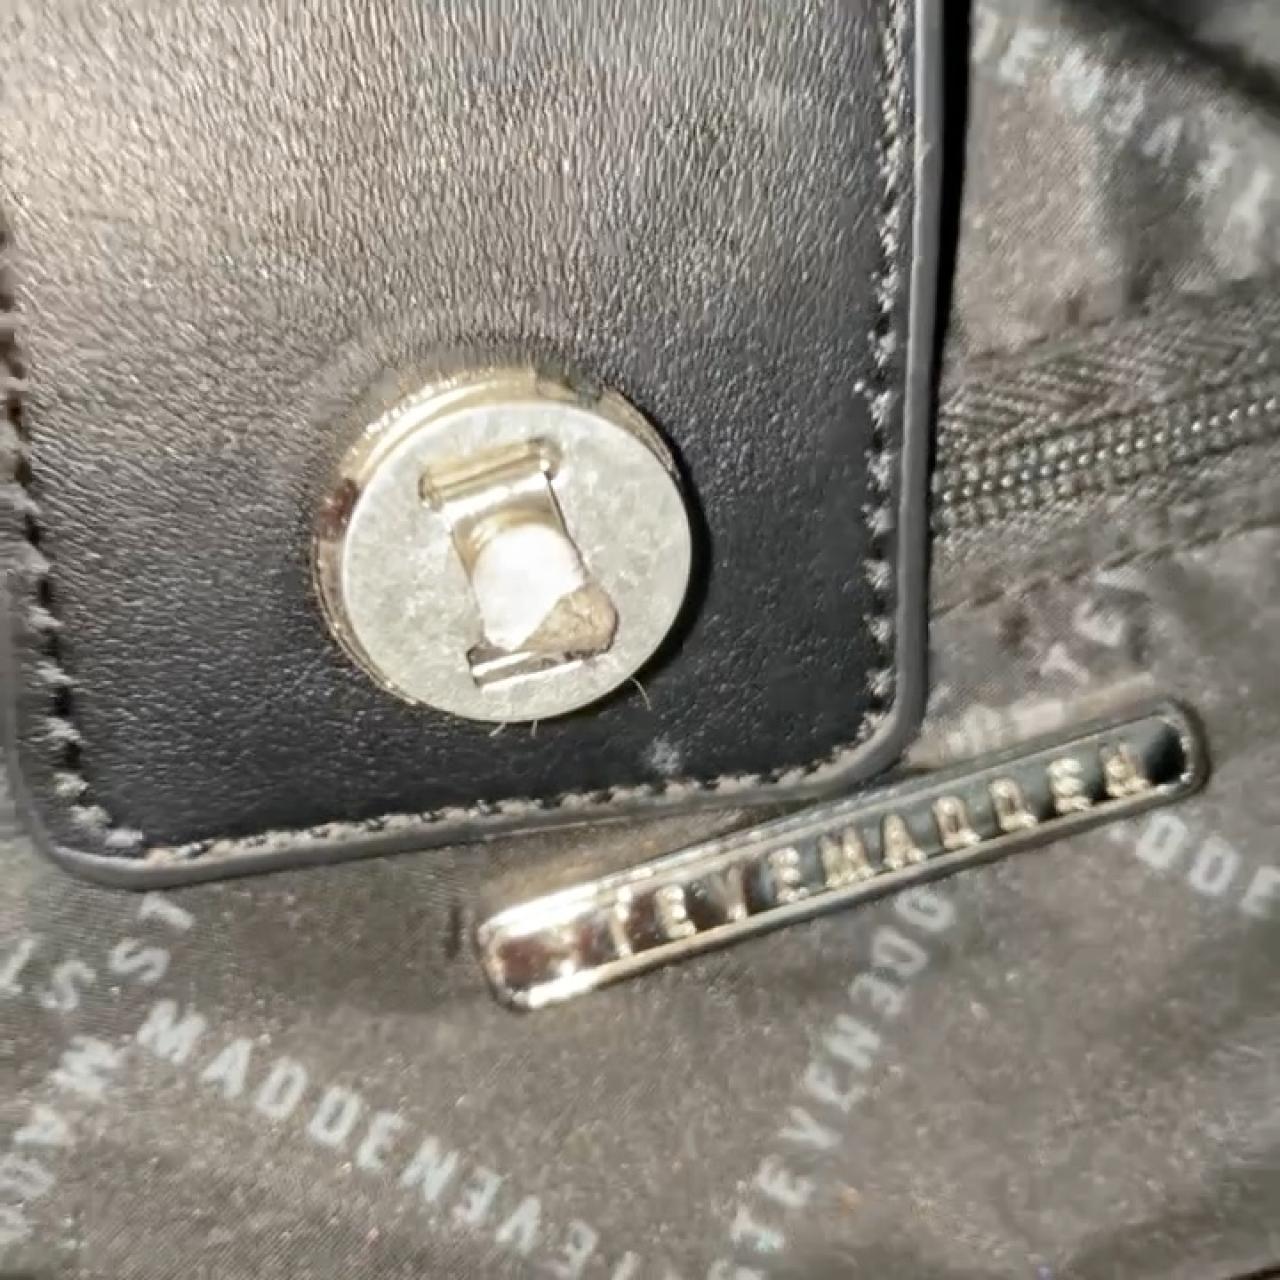 🖤⛓️🤍 New Rare Black Leather Steve Madden Duffle Bag - Depop